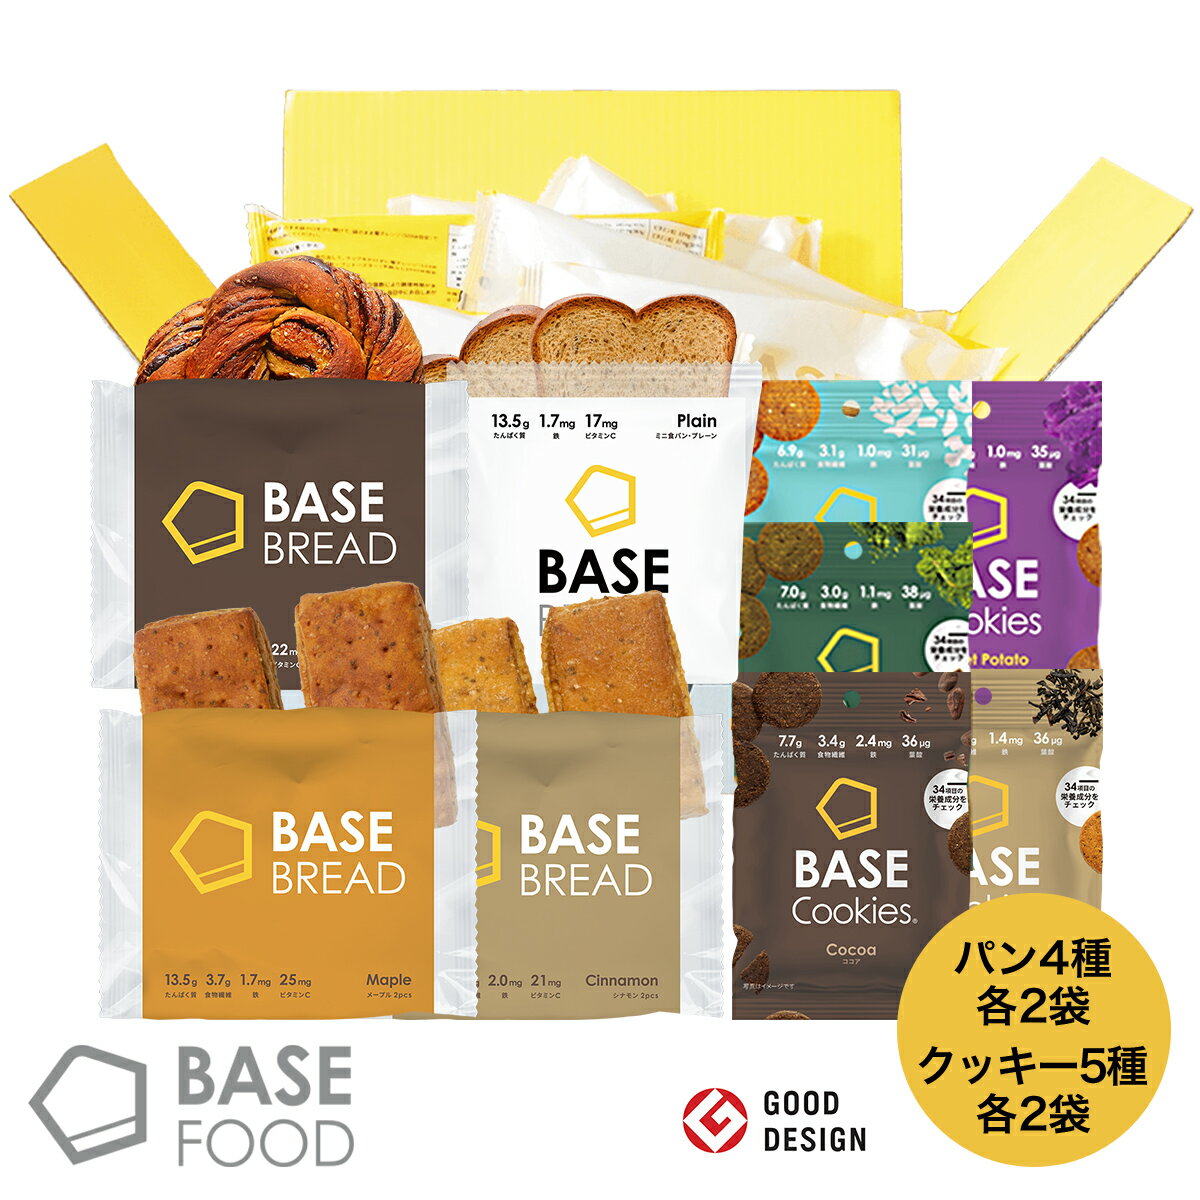 BASE BREAD& BASE Cookiesセット ミニ食パ